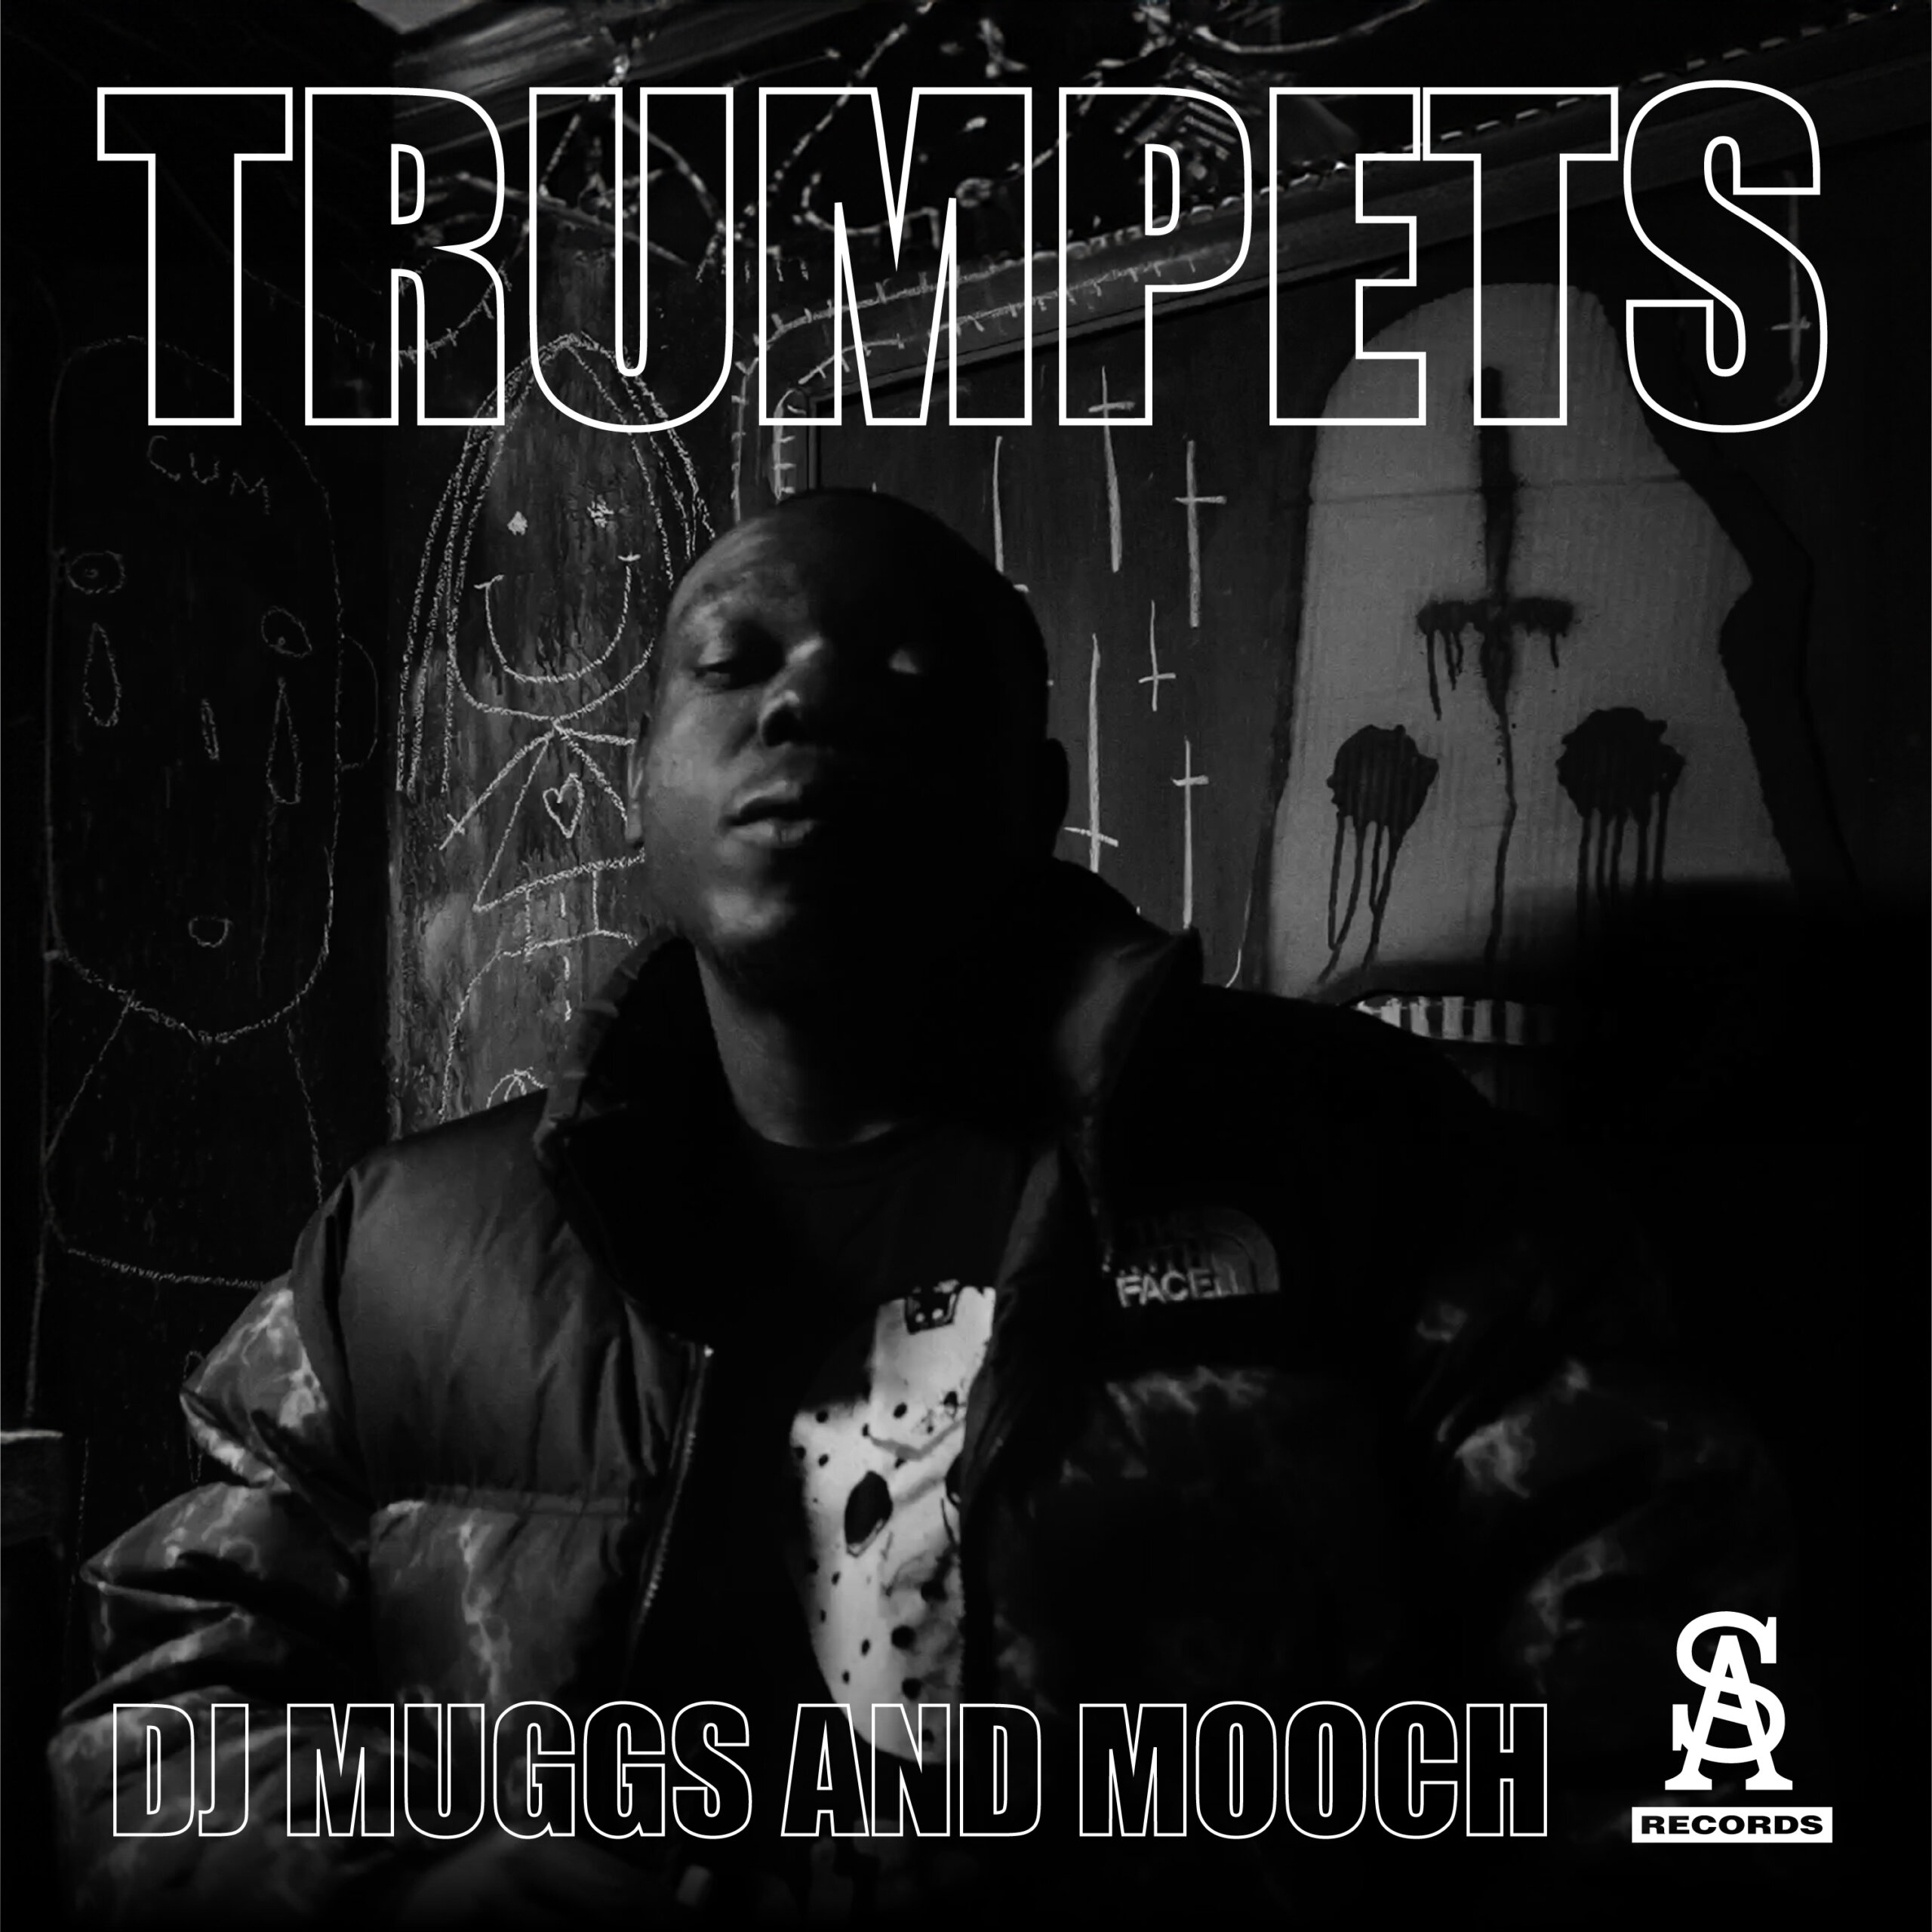 DJ Muggs & Mooch Blow "Trumpets" In Their New Video